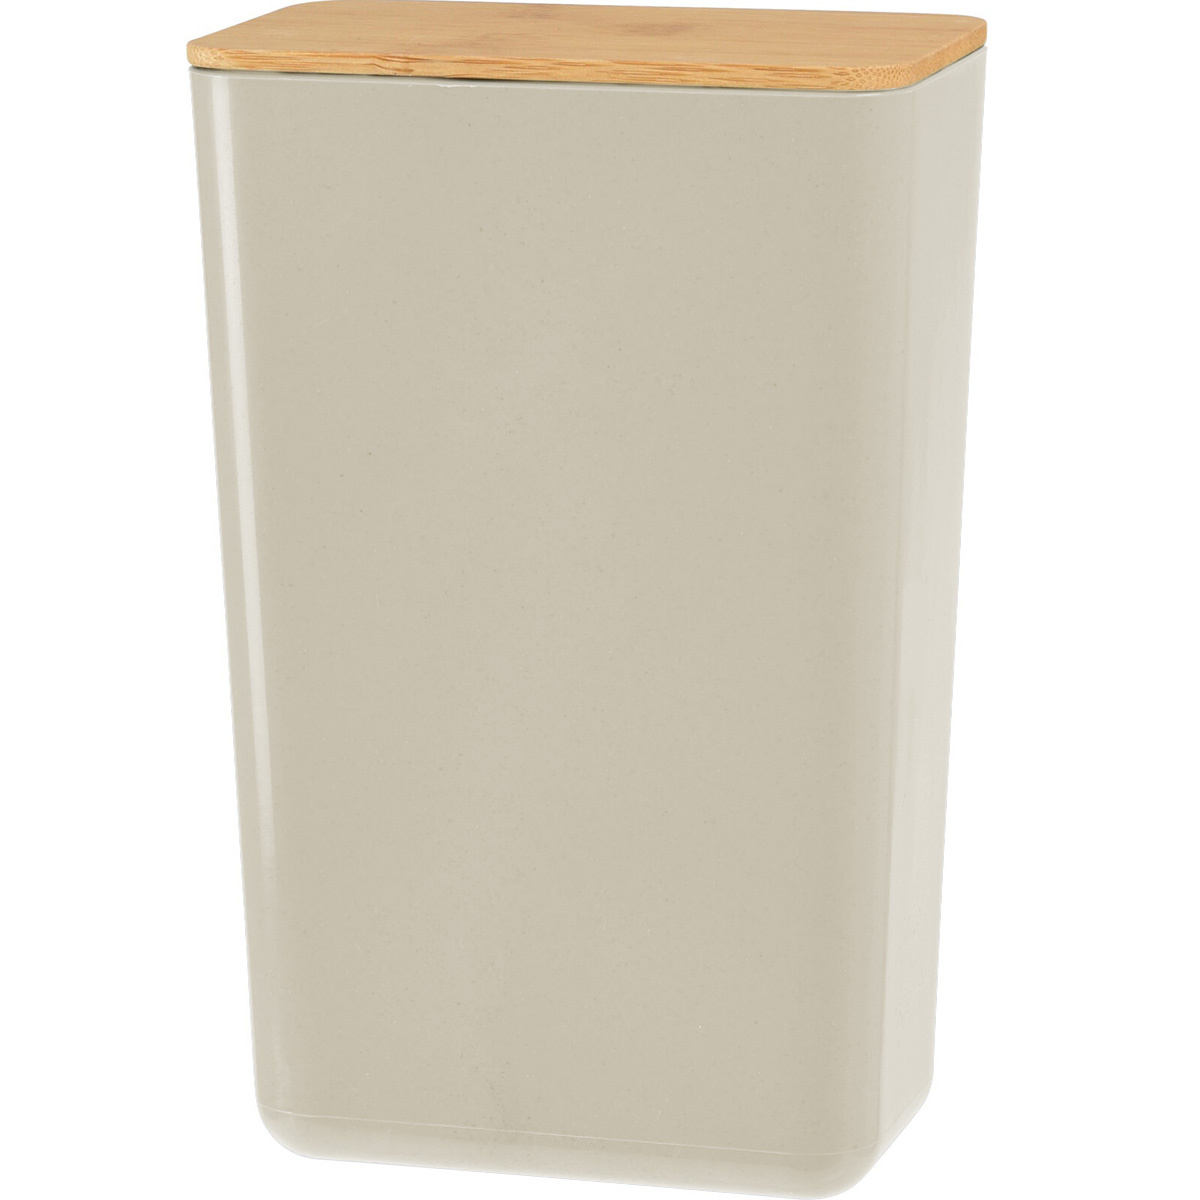 Úložný box s bambusovým víkem Roger, 13 x 20,7 x 8 cm, béžová